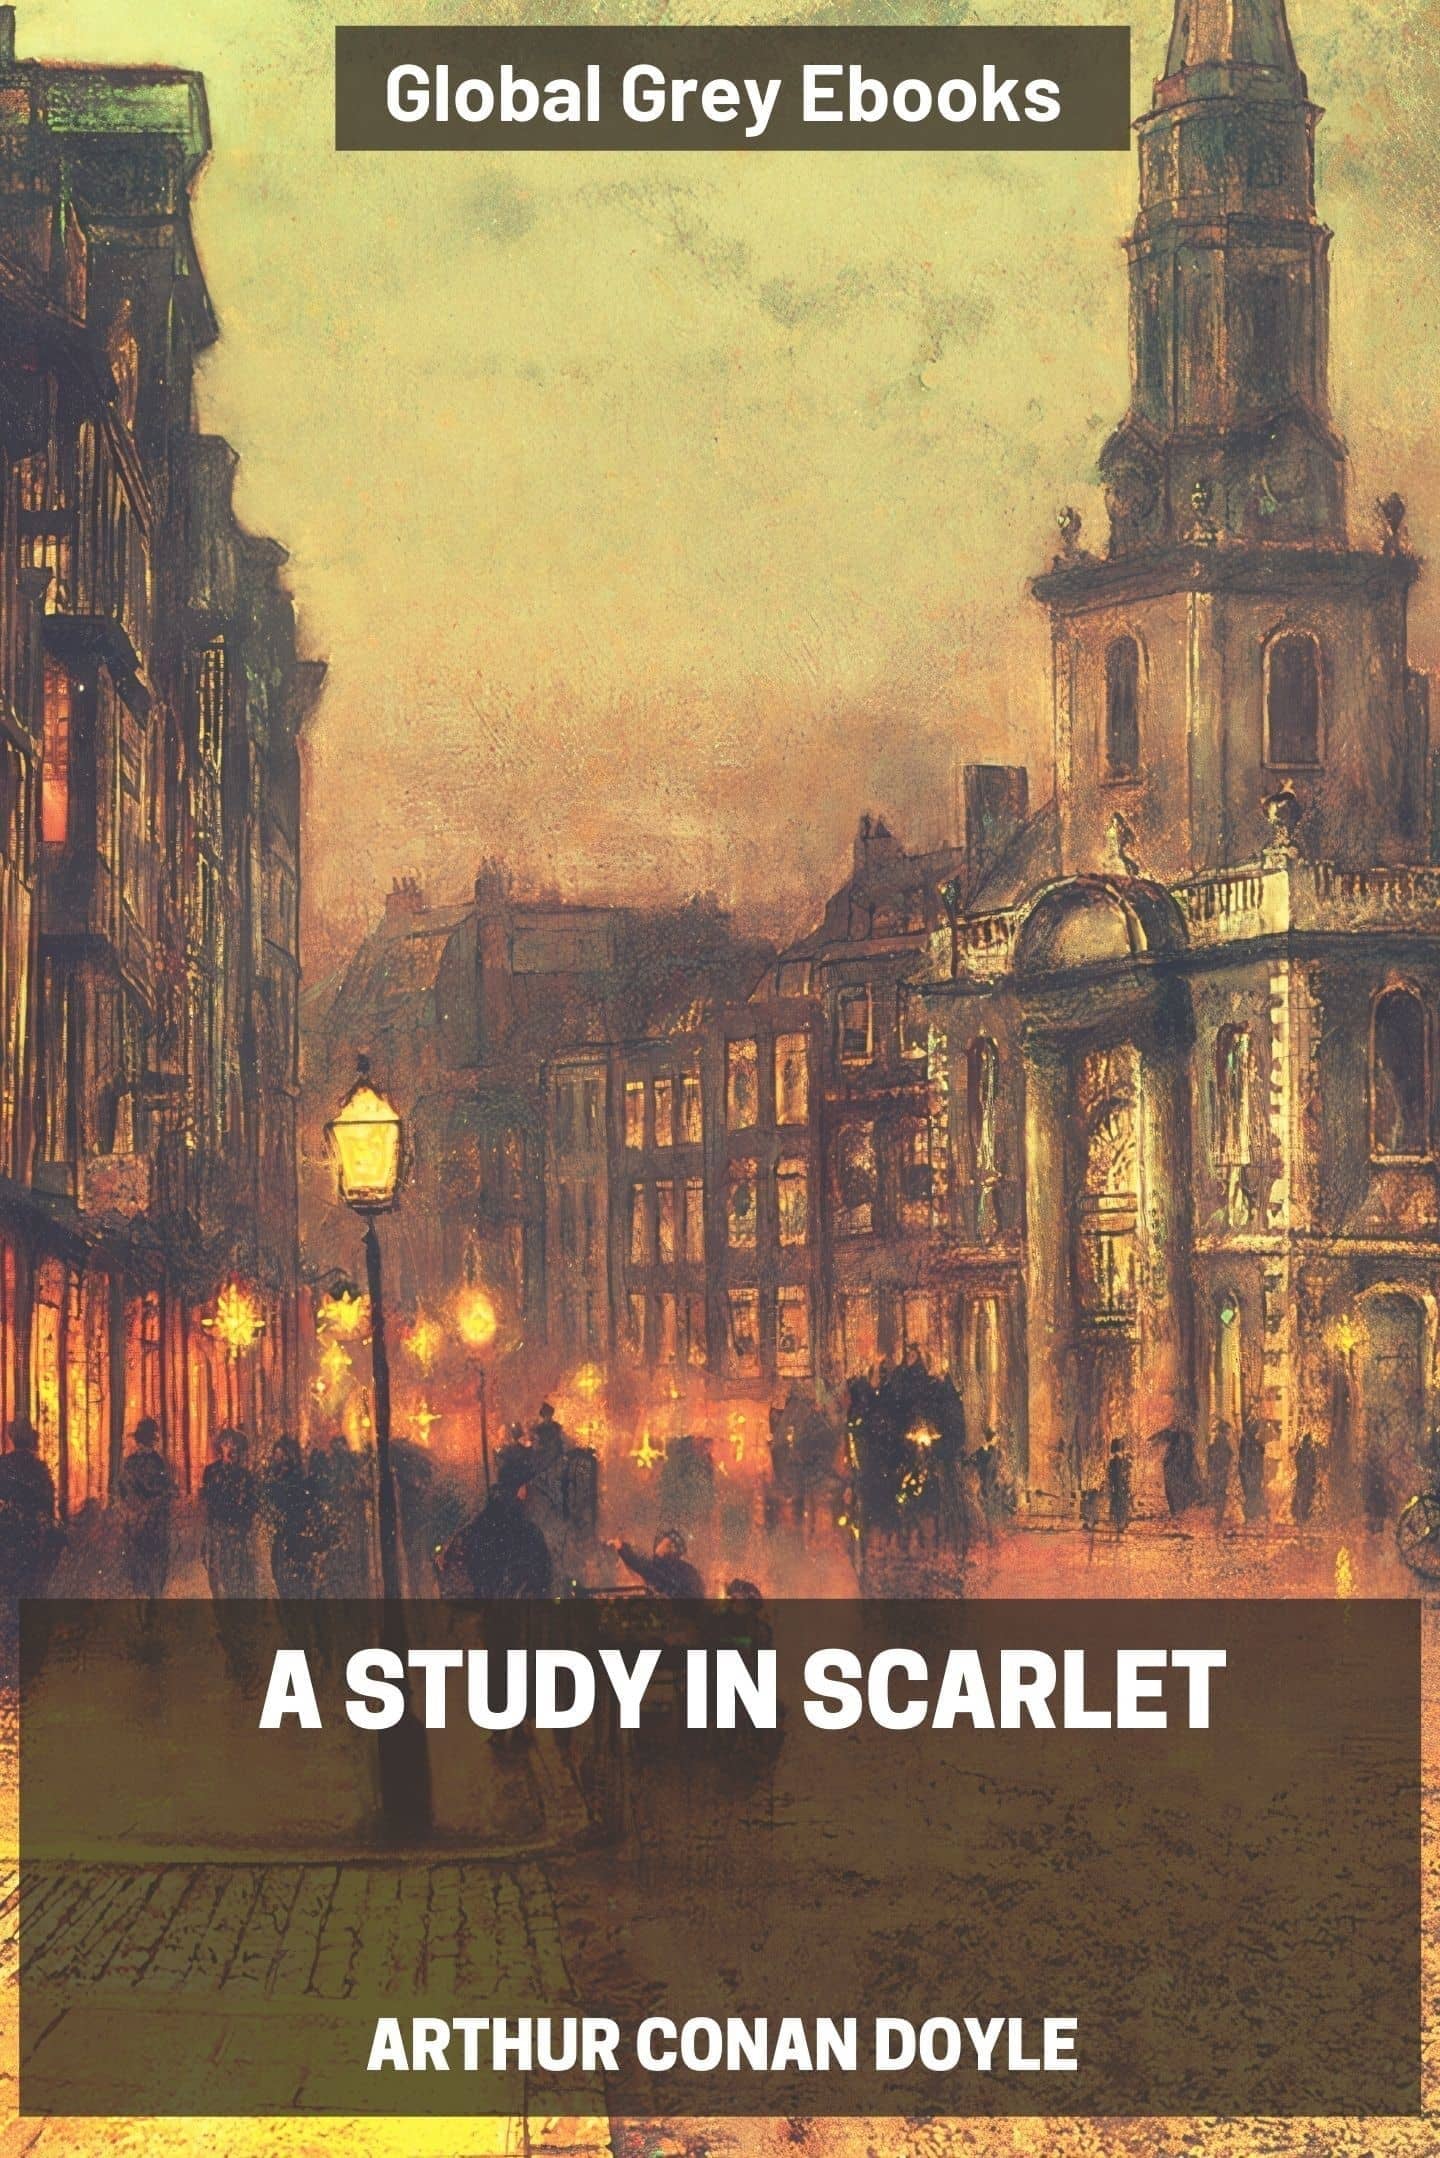 A study in scarlet pdf download gaap pdf download